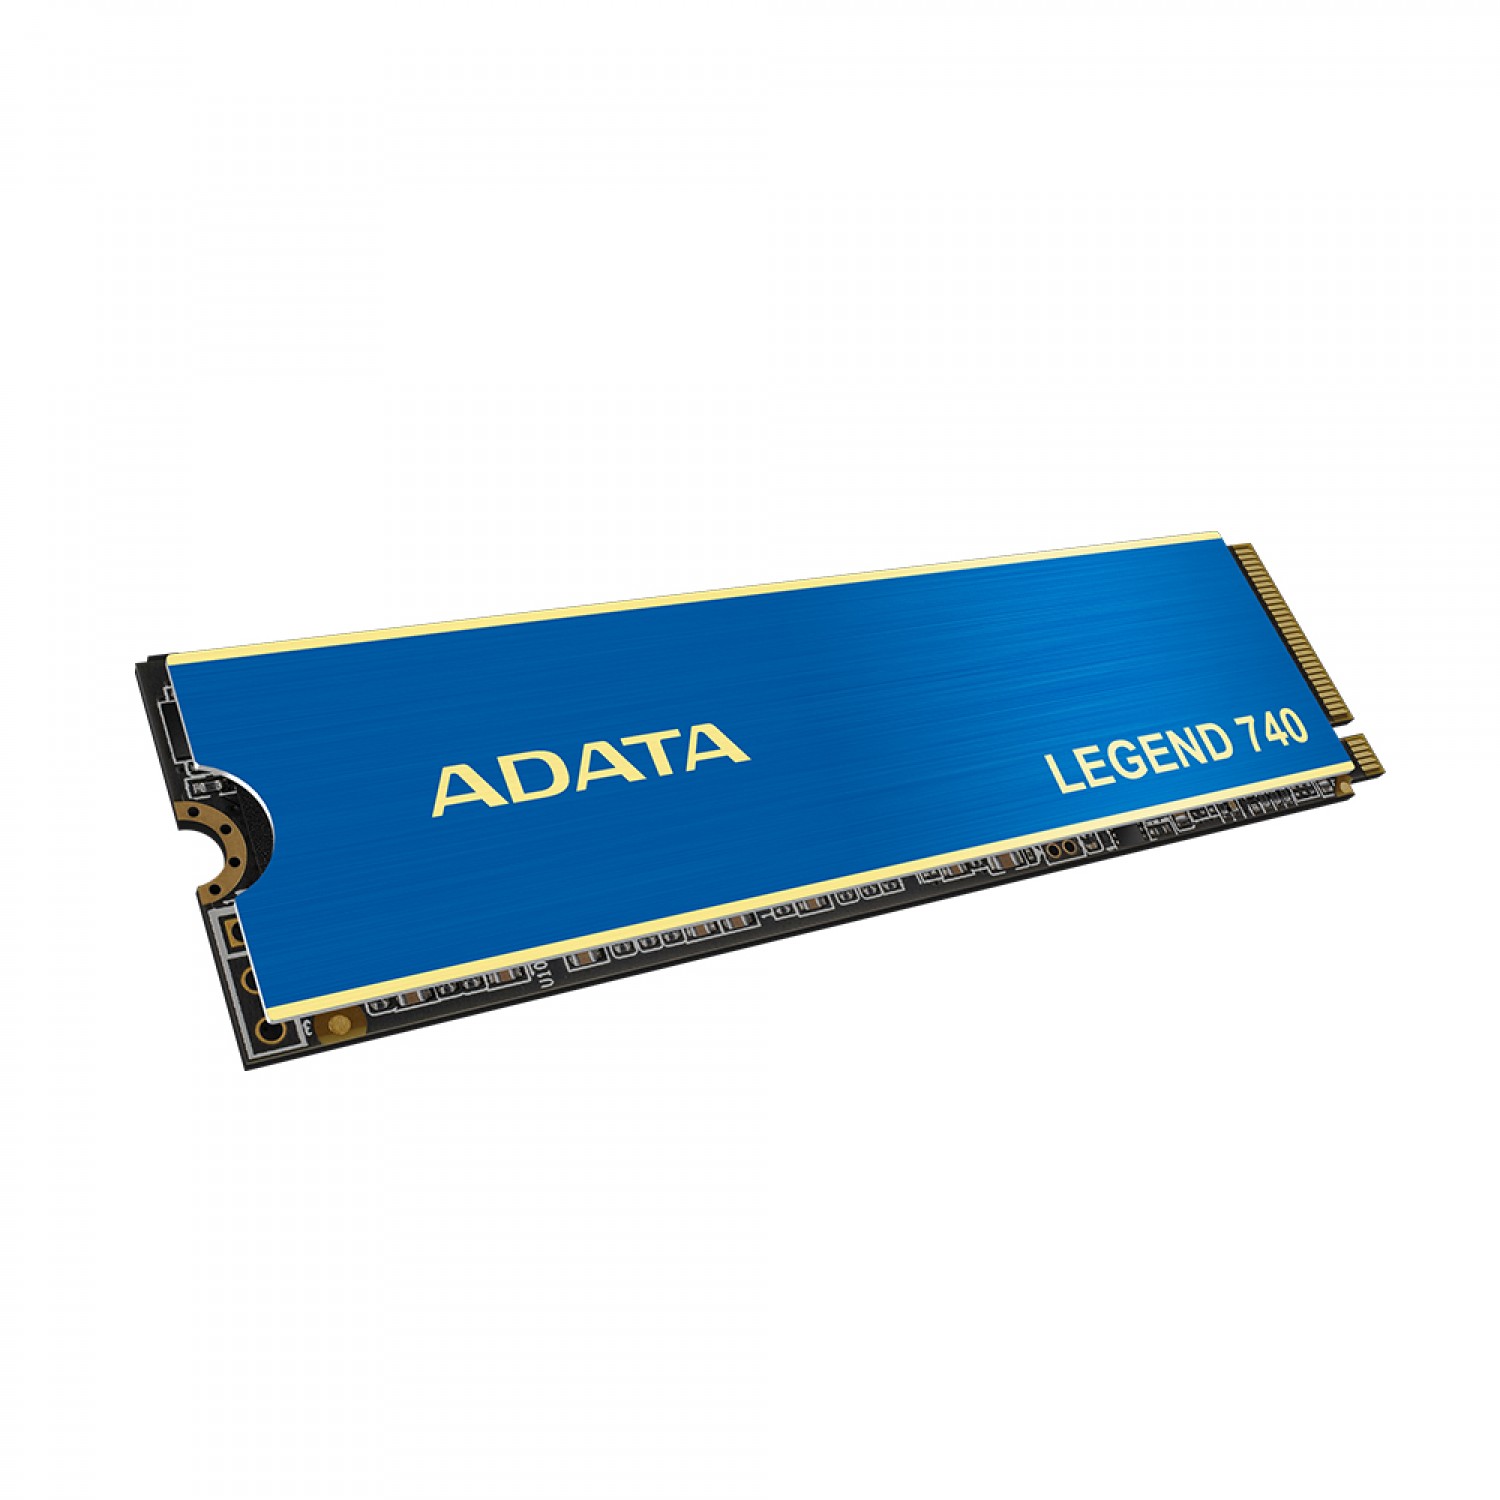 حافظه اس اس دی ADATA Legend 740 250GB-3